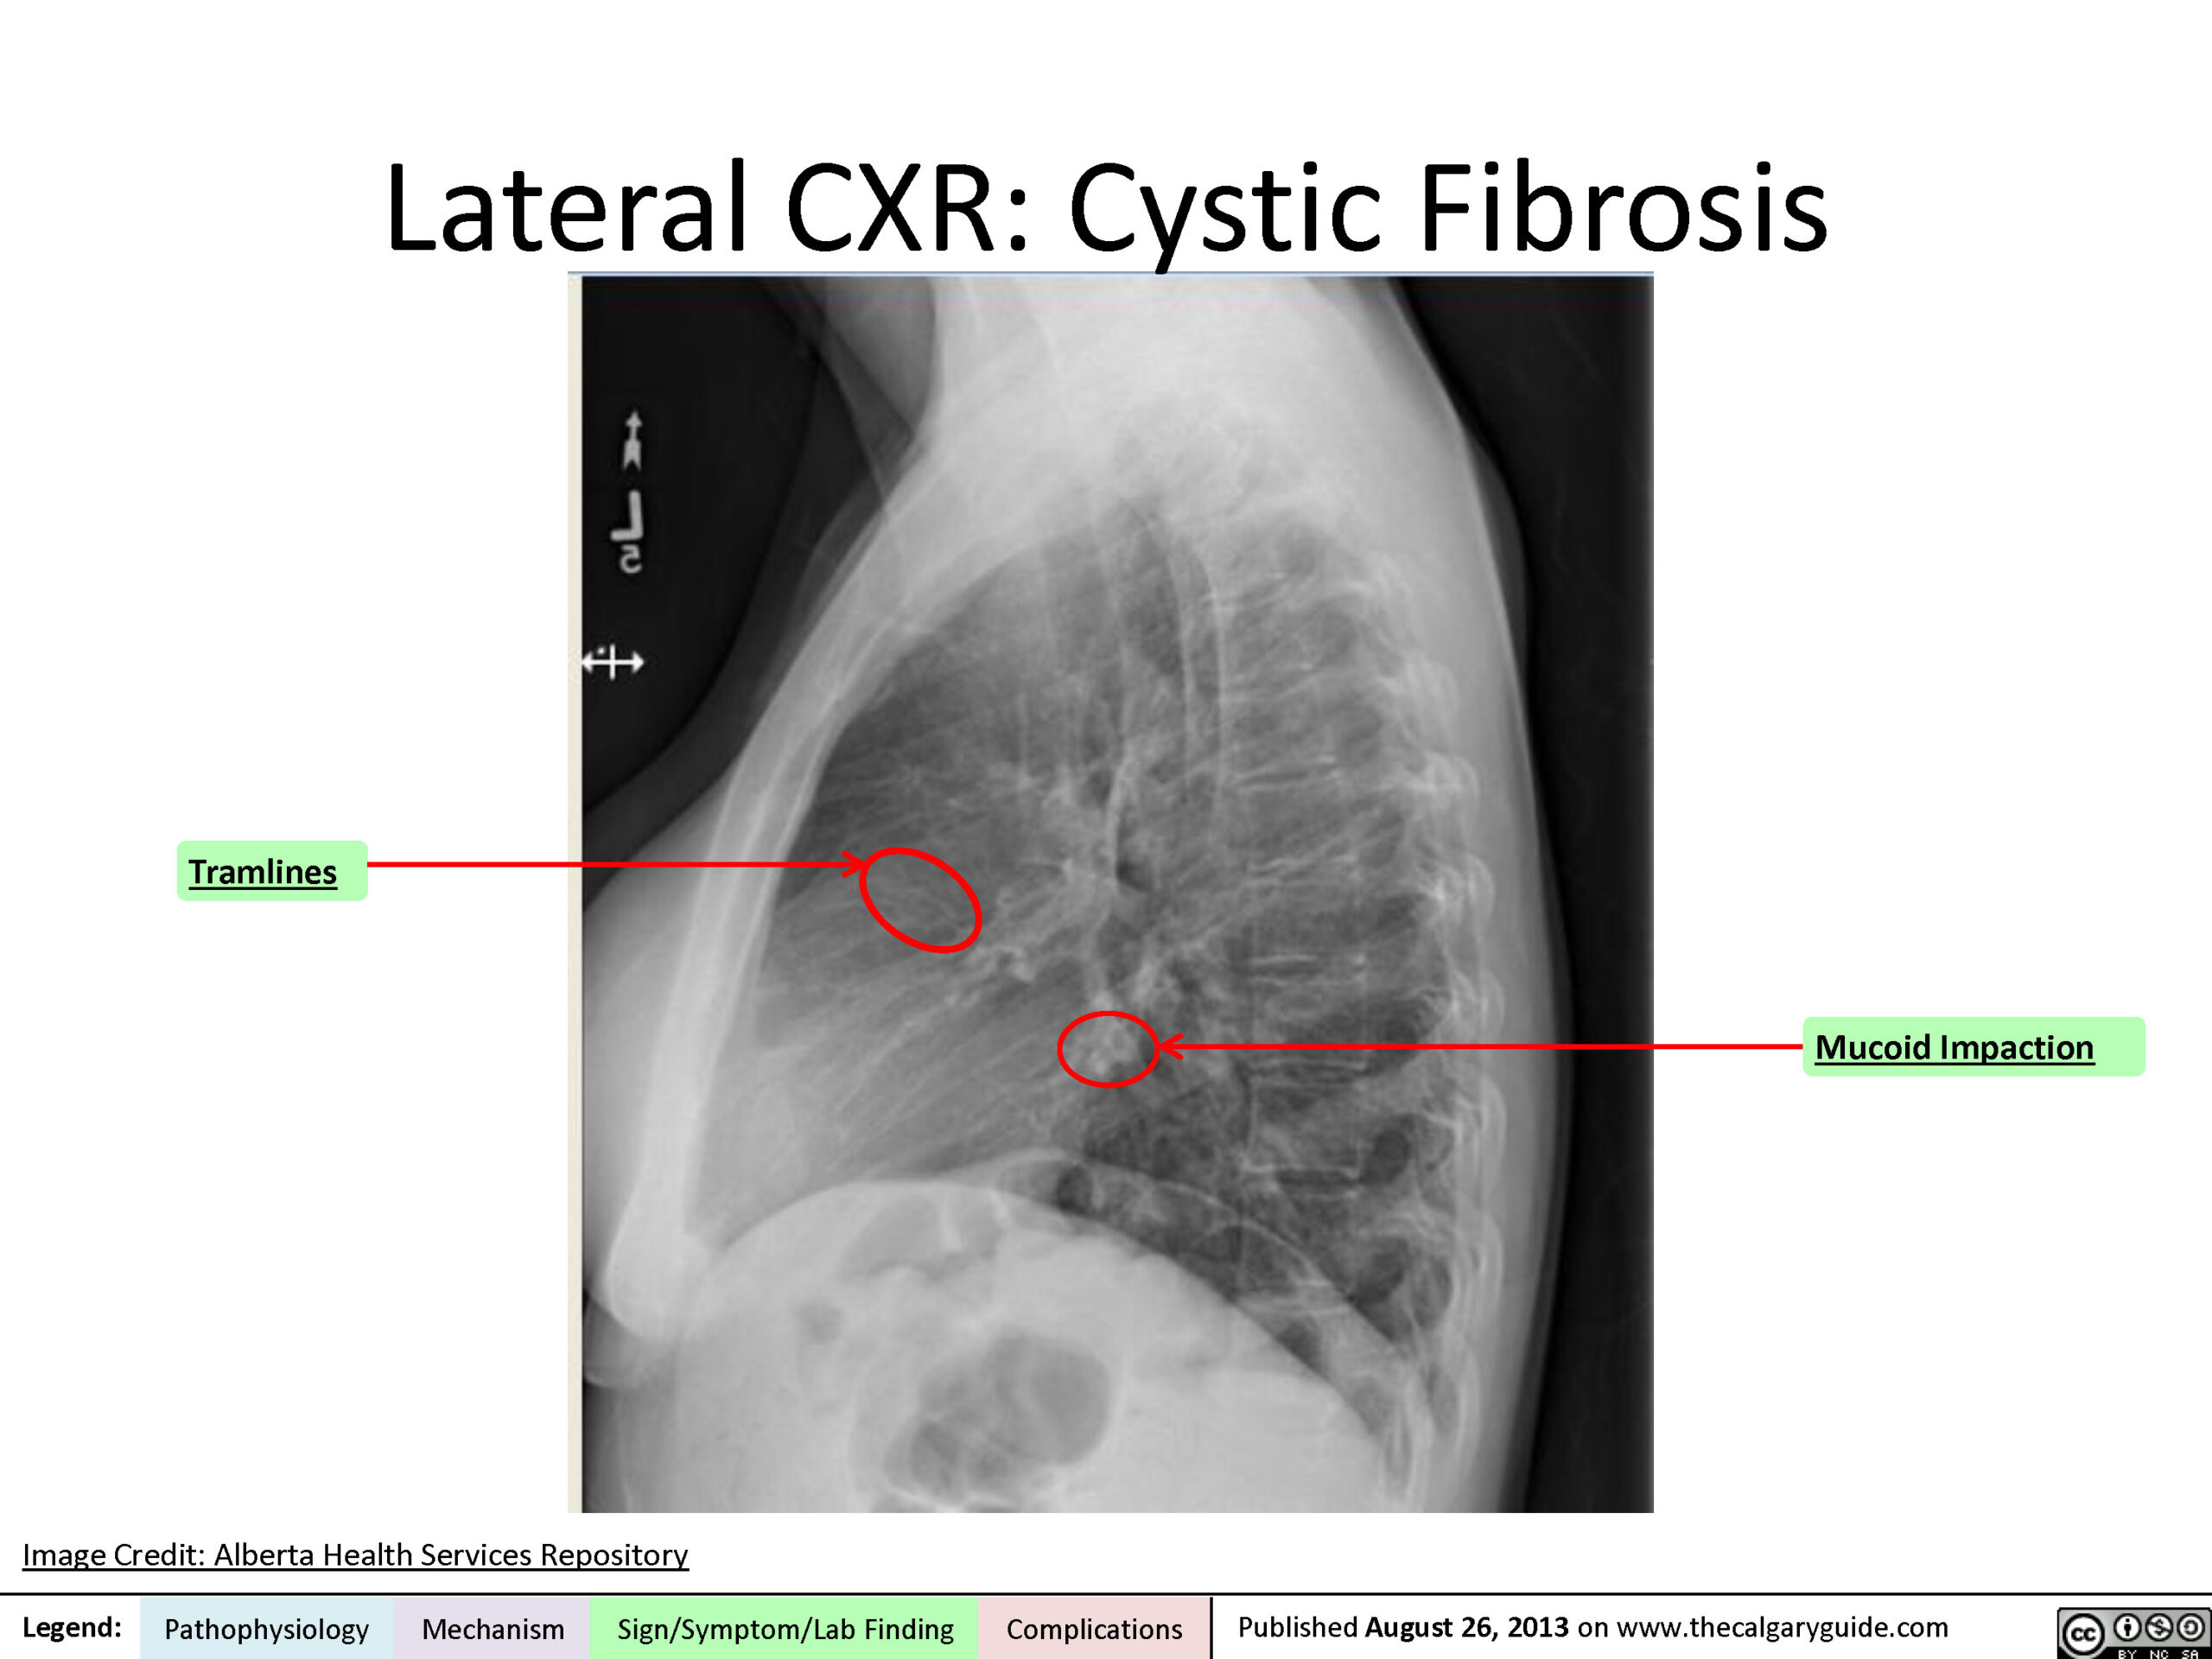 Cystic fibrosis: Lateral CXR